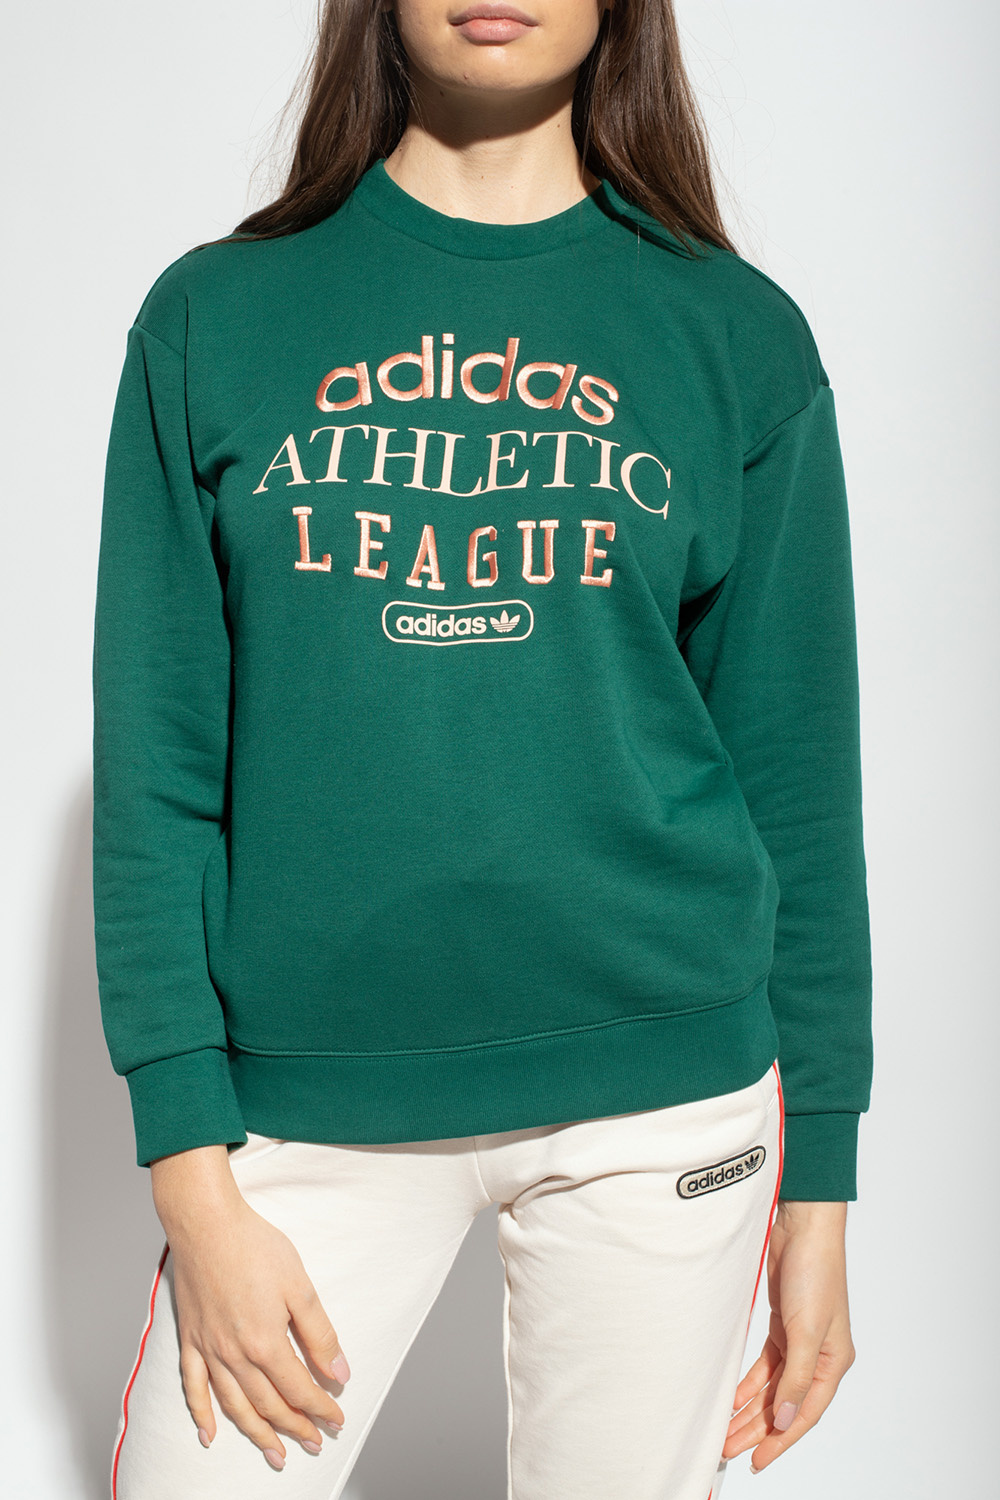 ADIDAS Originals Sweatshirt with logo | Women's Clothing | Vitkac